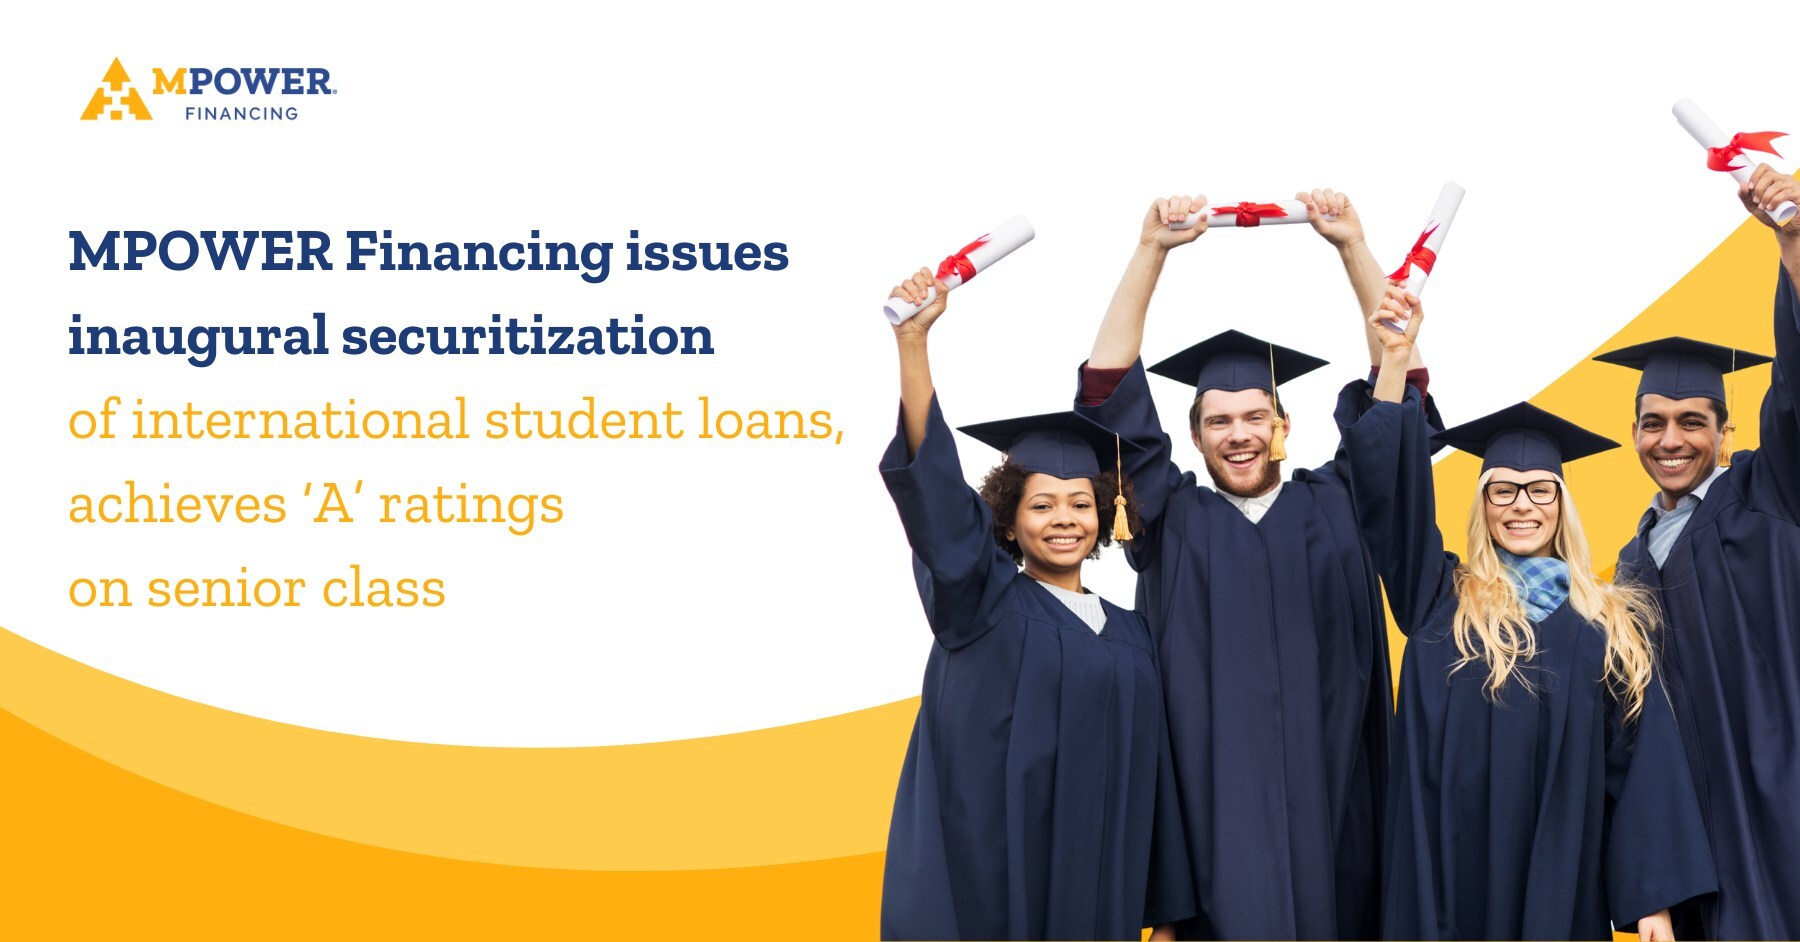 MPOWER Financing首次发行国际学生贷款证券化，在高年级获得“A”评级